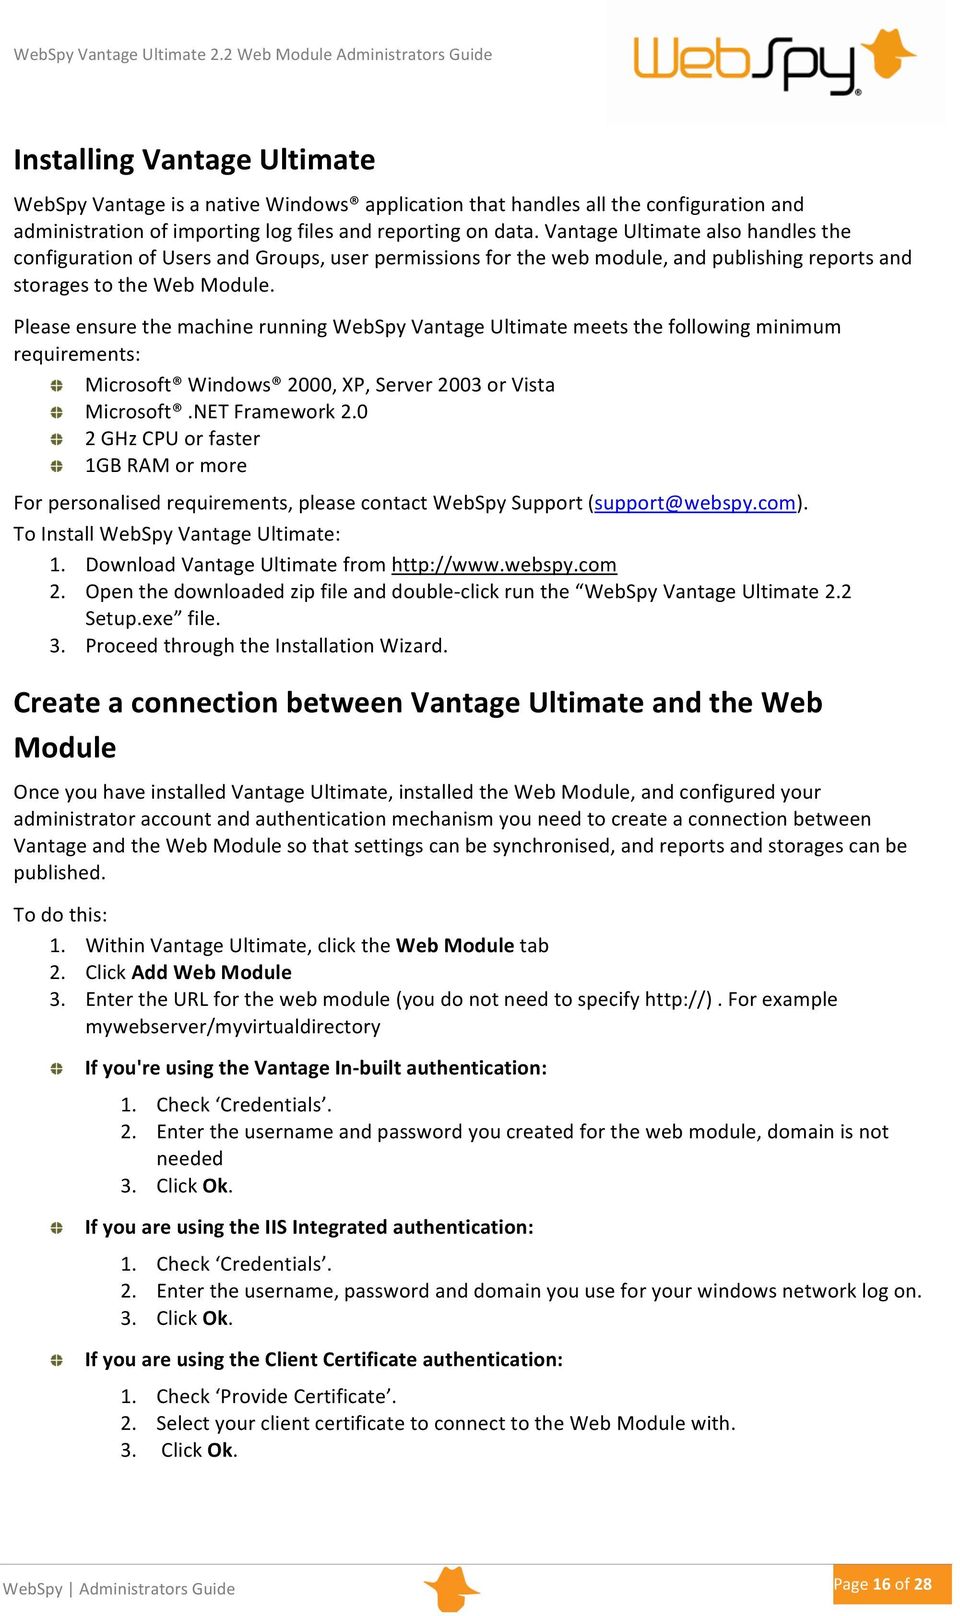 Please ensure the machine running WebSpy Vantage Ultimate meets the following minimum requirements: Microsoft Windows 2000, XP, Server 2003 or Vista Microsoft.NET Framework 2.